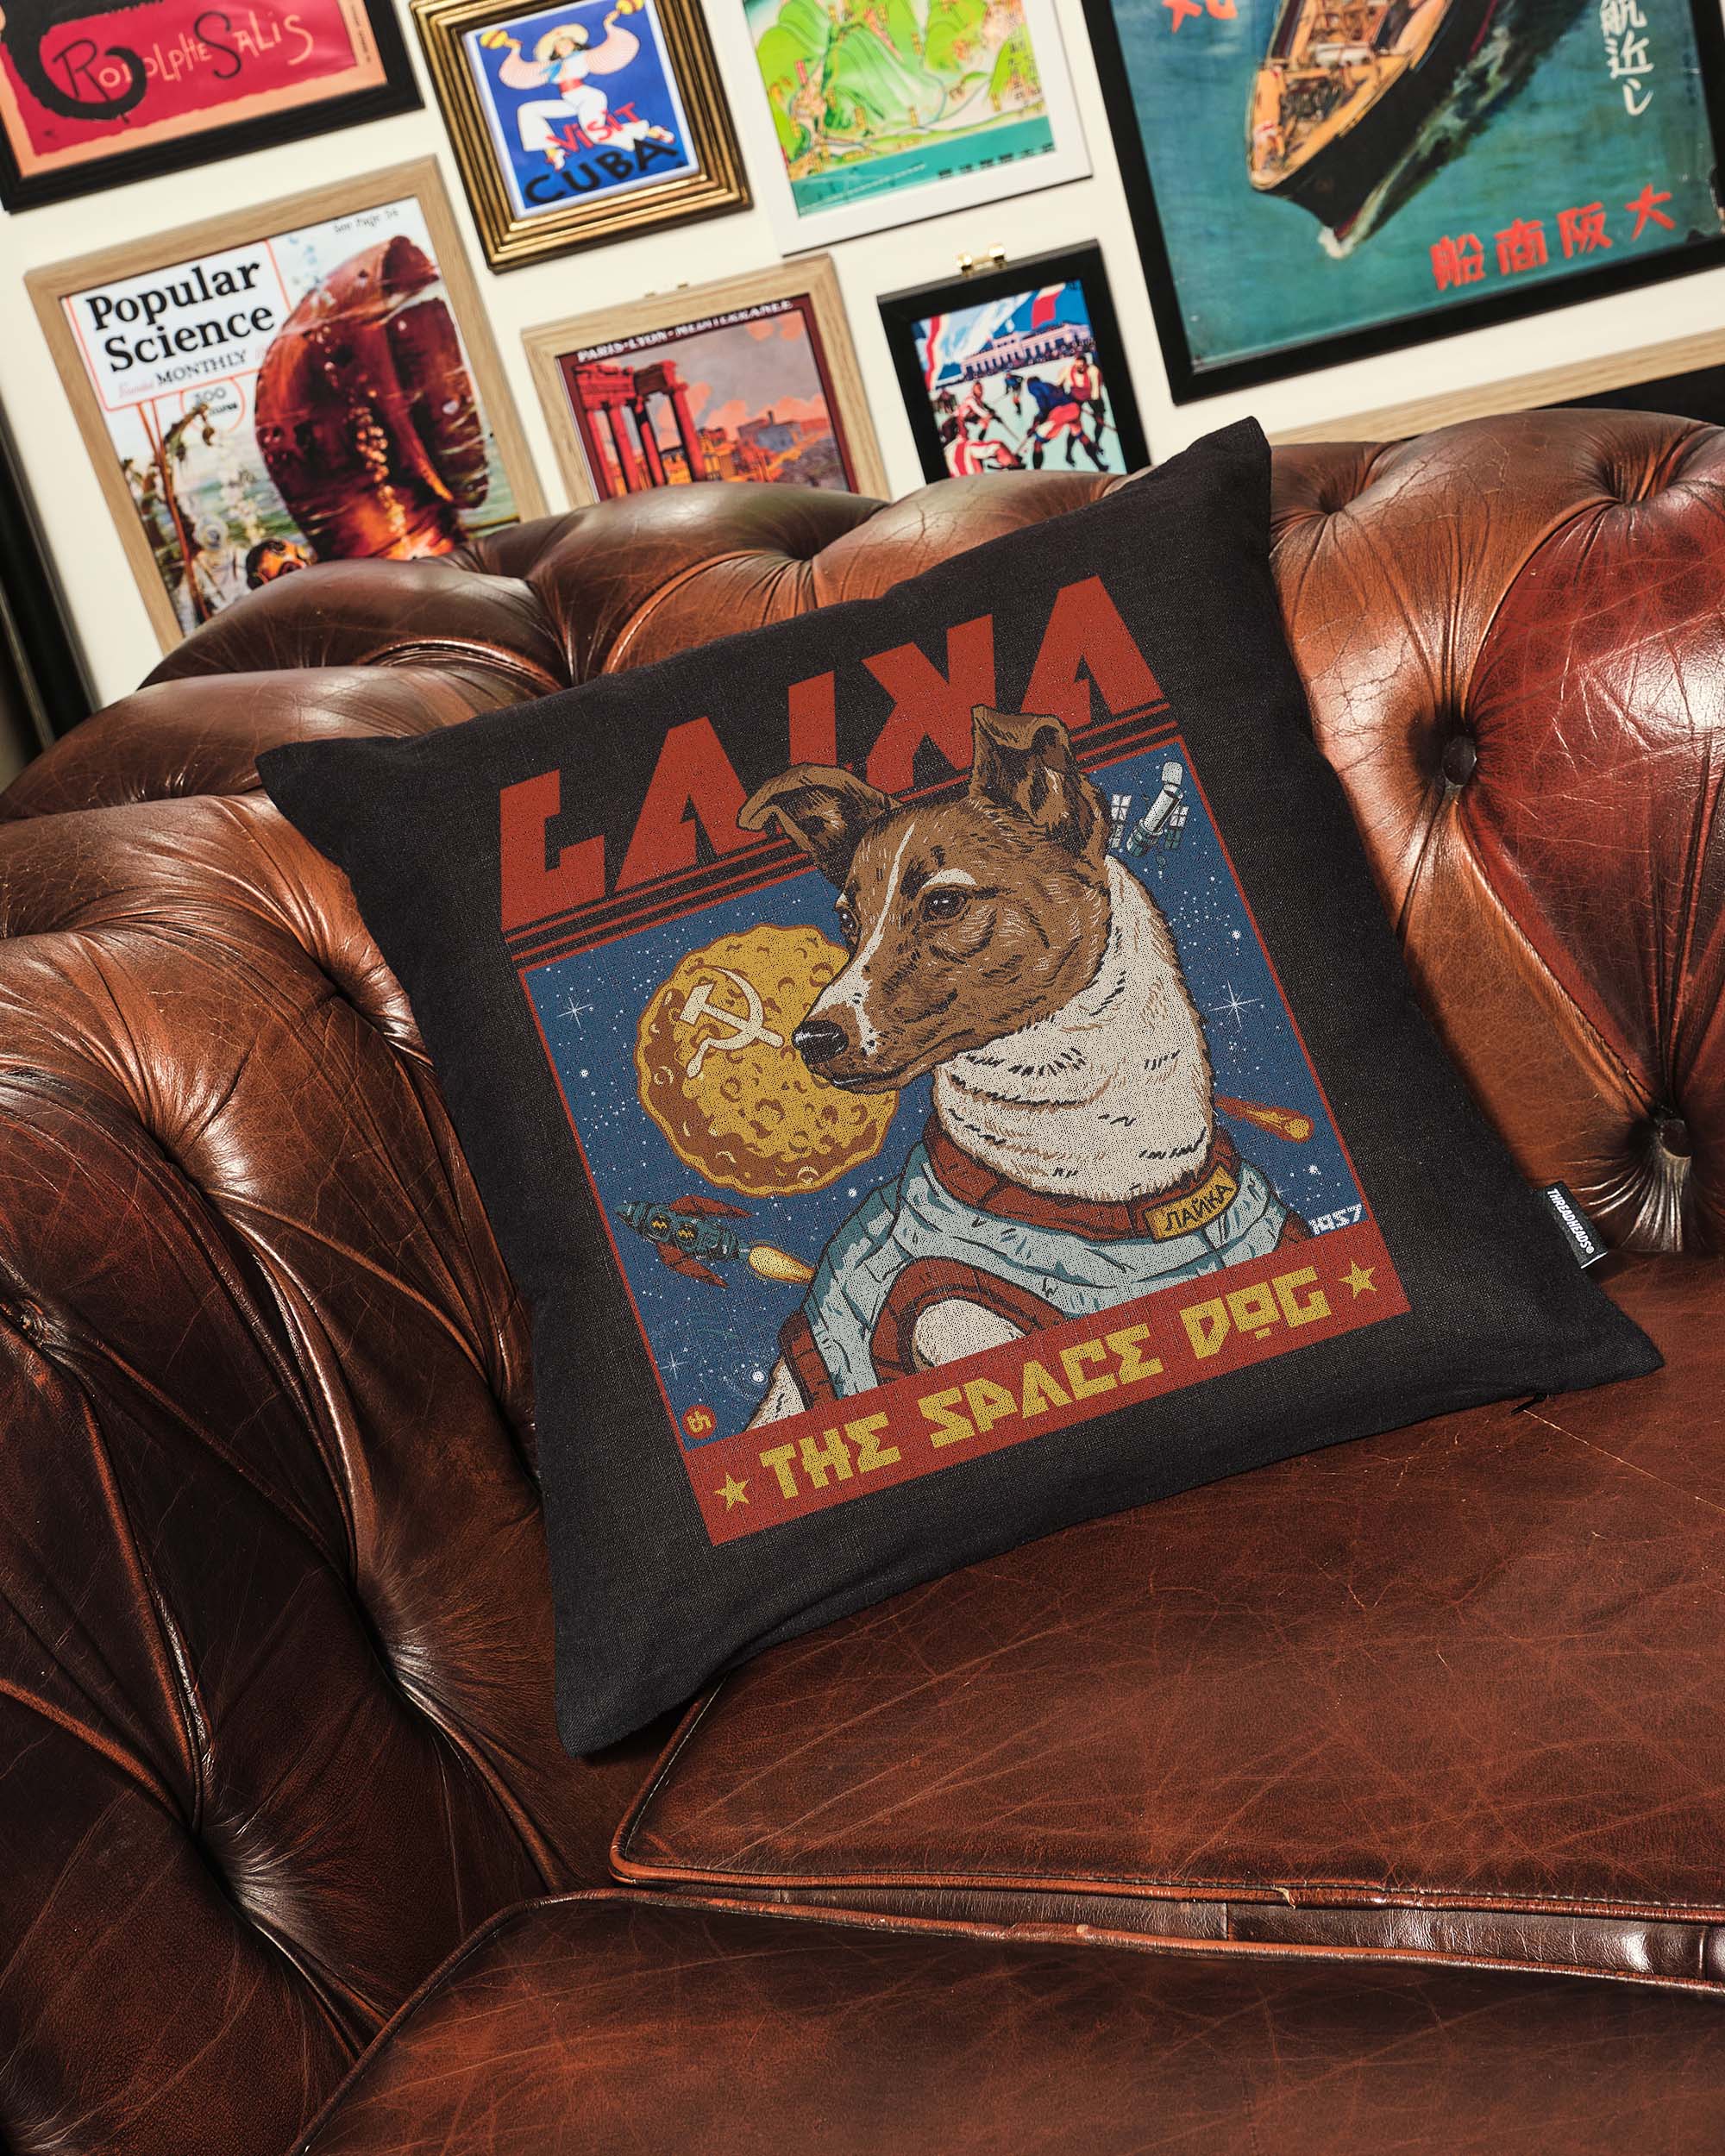 Laika the Space Dog Cushion